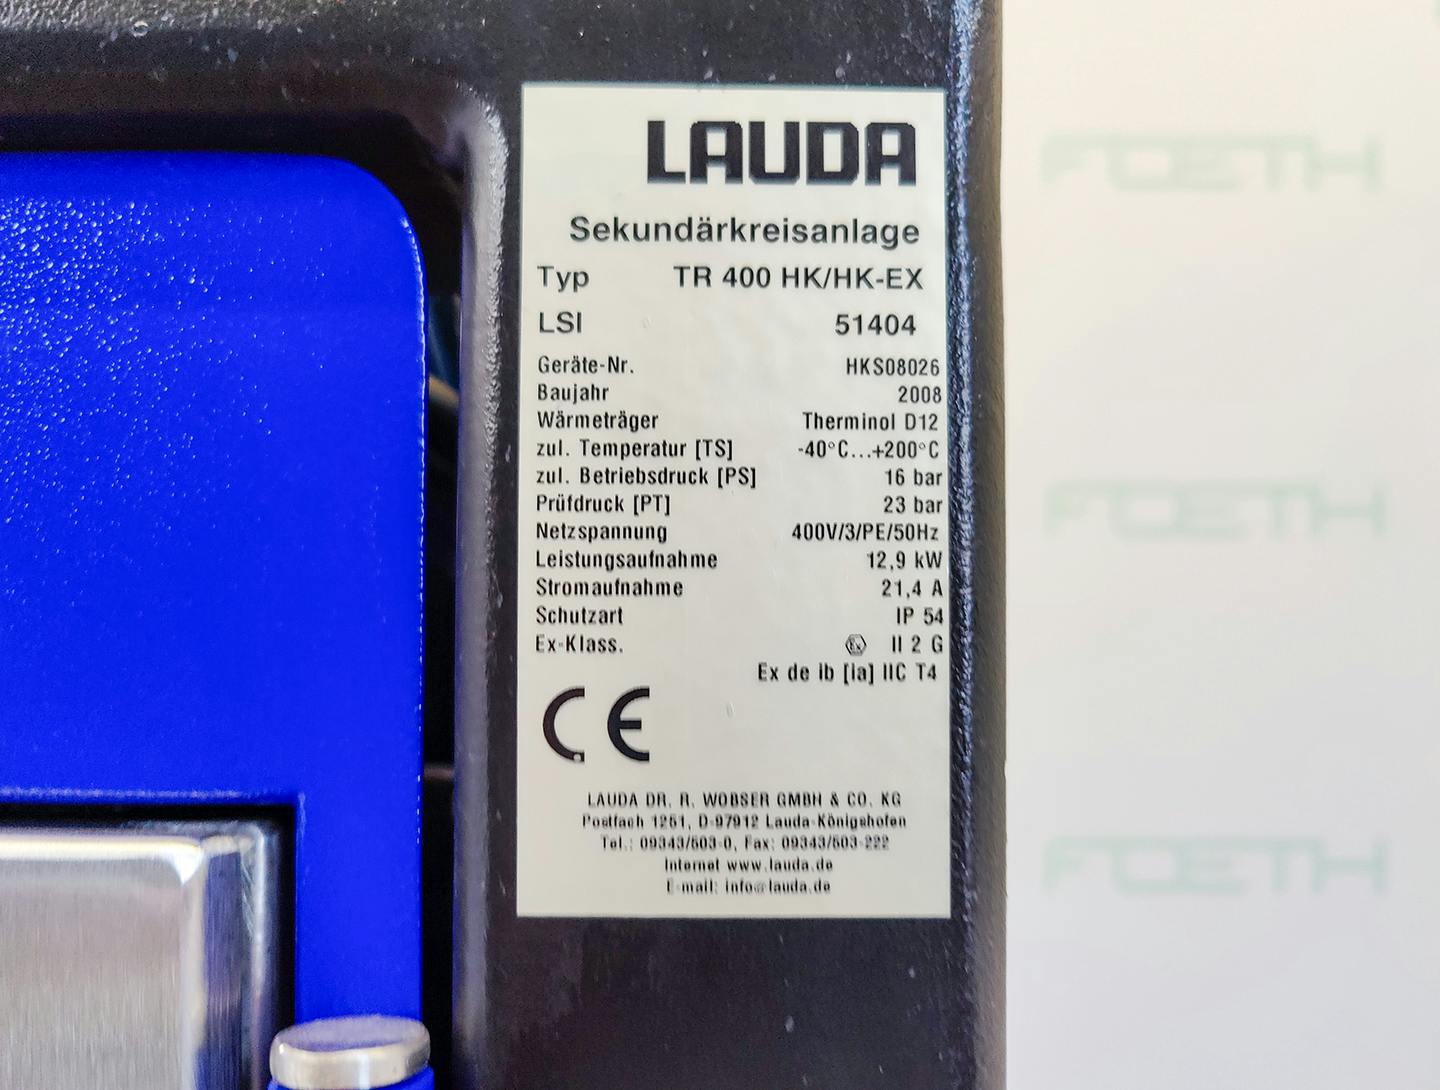 Lauda TR400 HK/HK-EX "secondary circuit system" - Unità di fluido termico - image 14